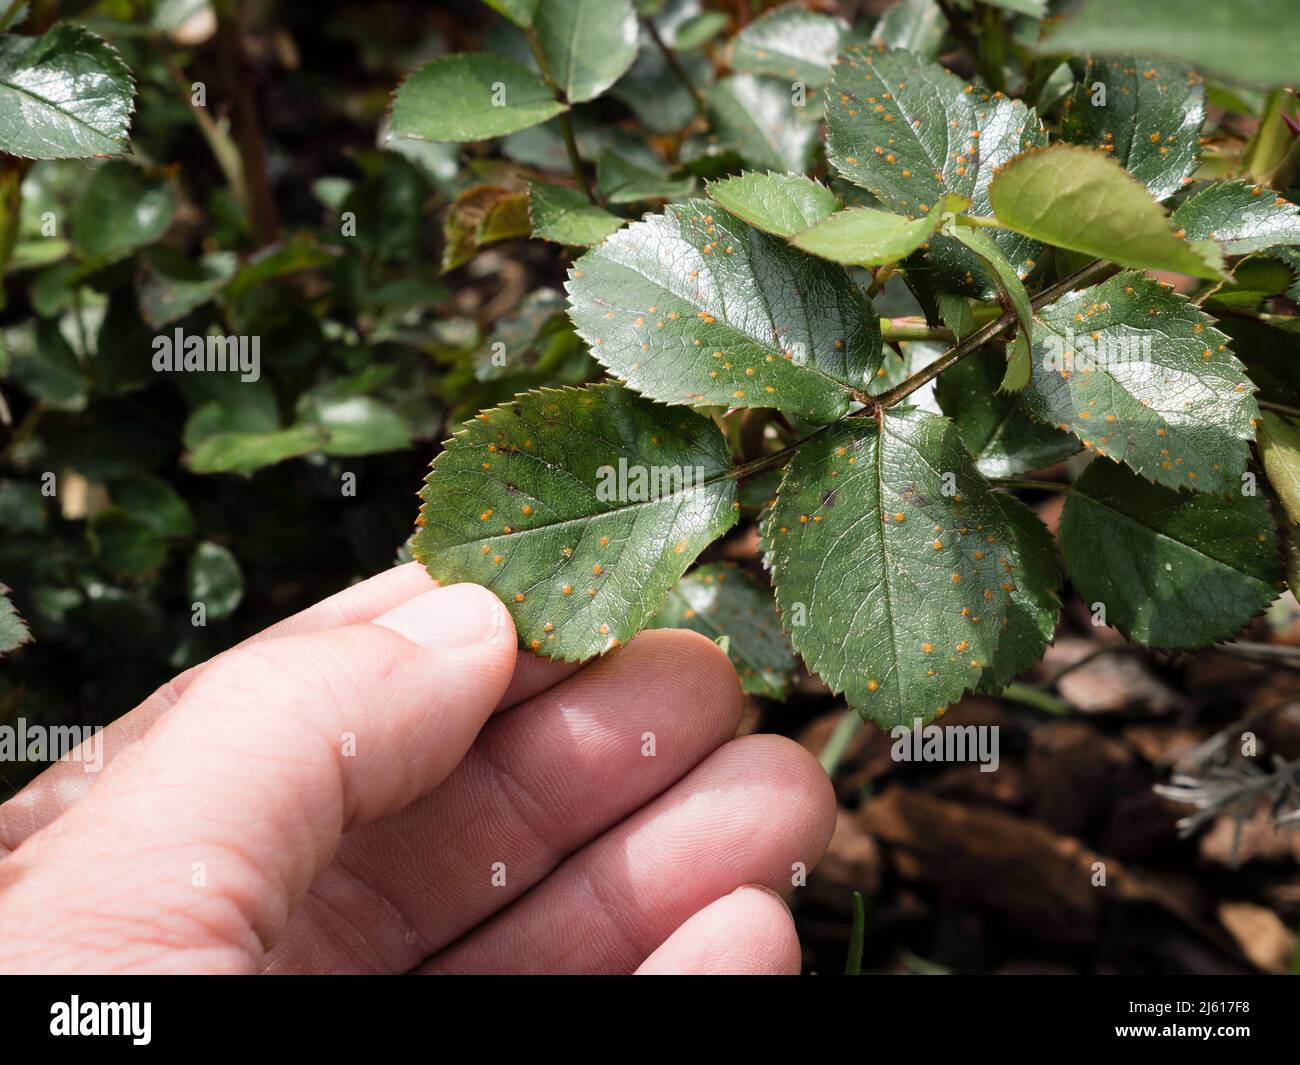 gardeners hand holding infected leaf with rose rust Phragmidium mucronatum Stock Photo